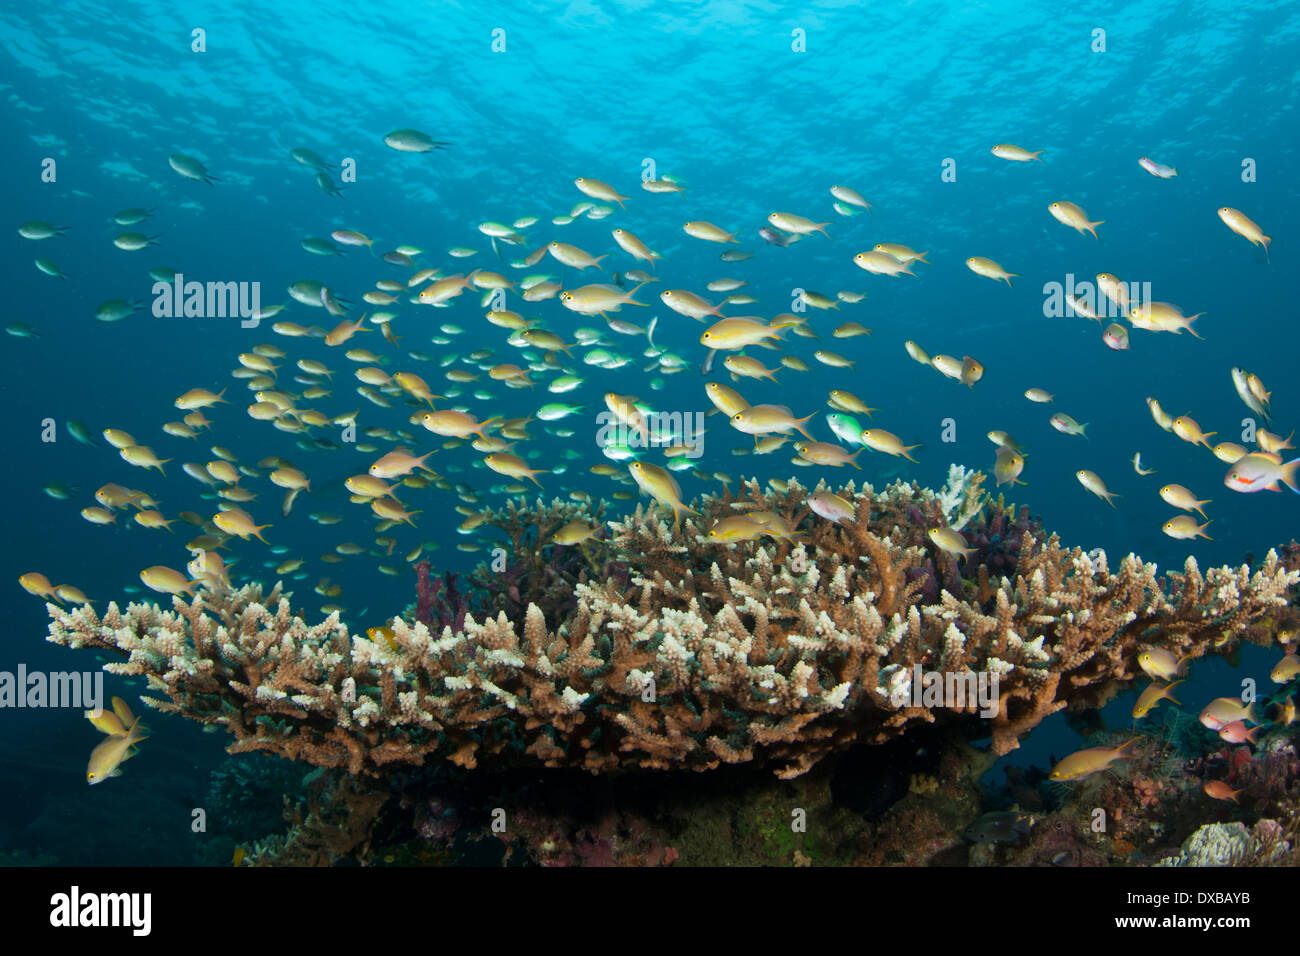 Schooling Anthias Fish over coral reef, Mbpaimuk Reef dive site, Tanjung Island, Raja Ampat, Indonesia Stock Photo